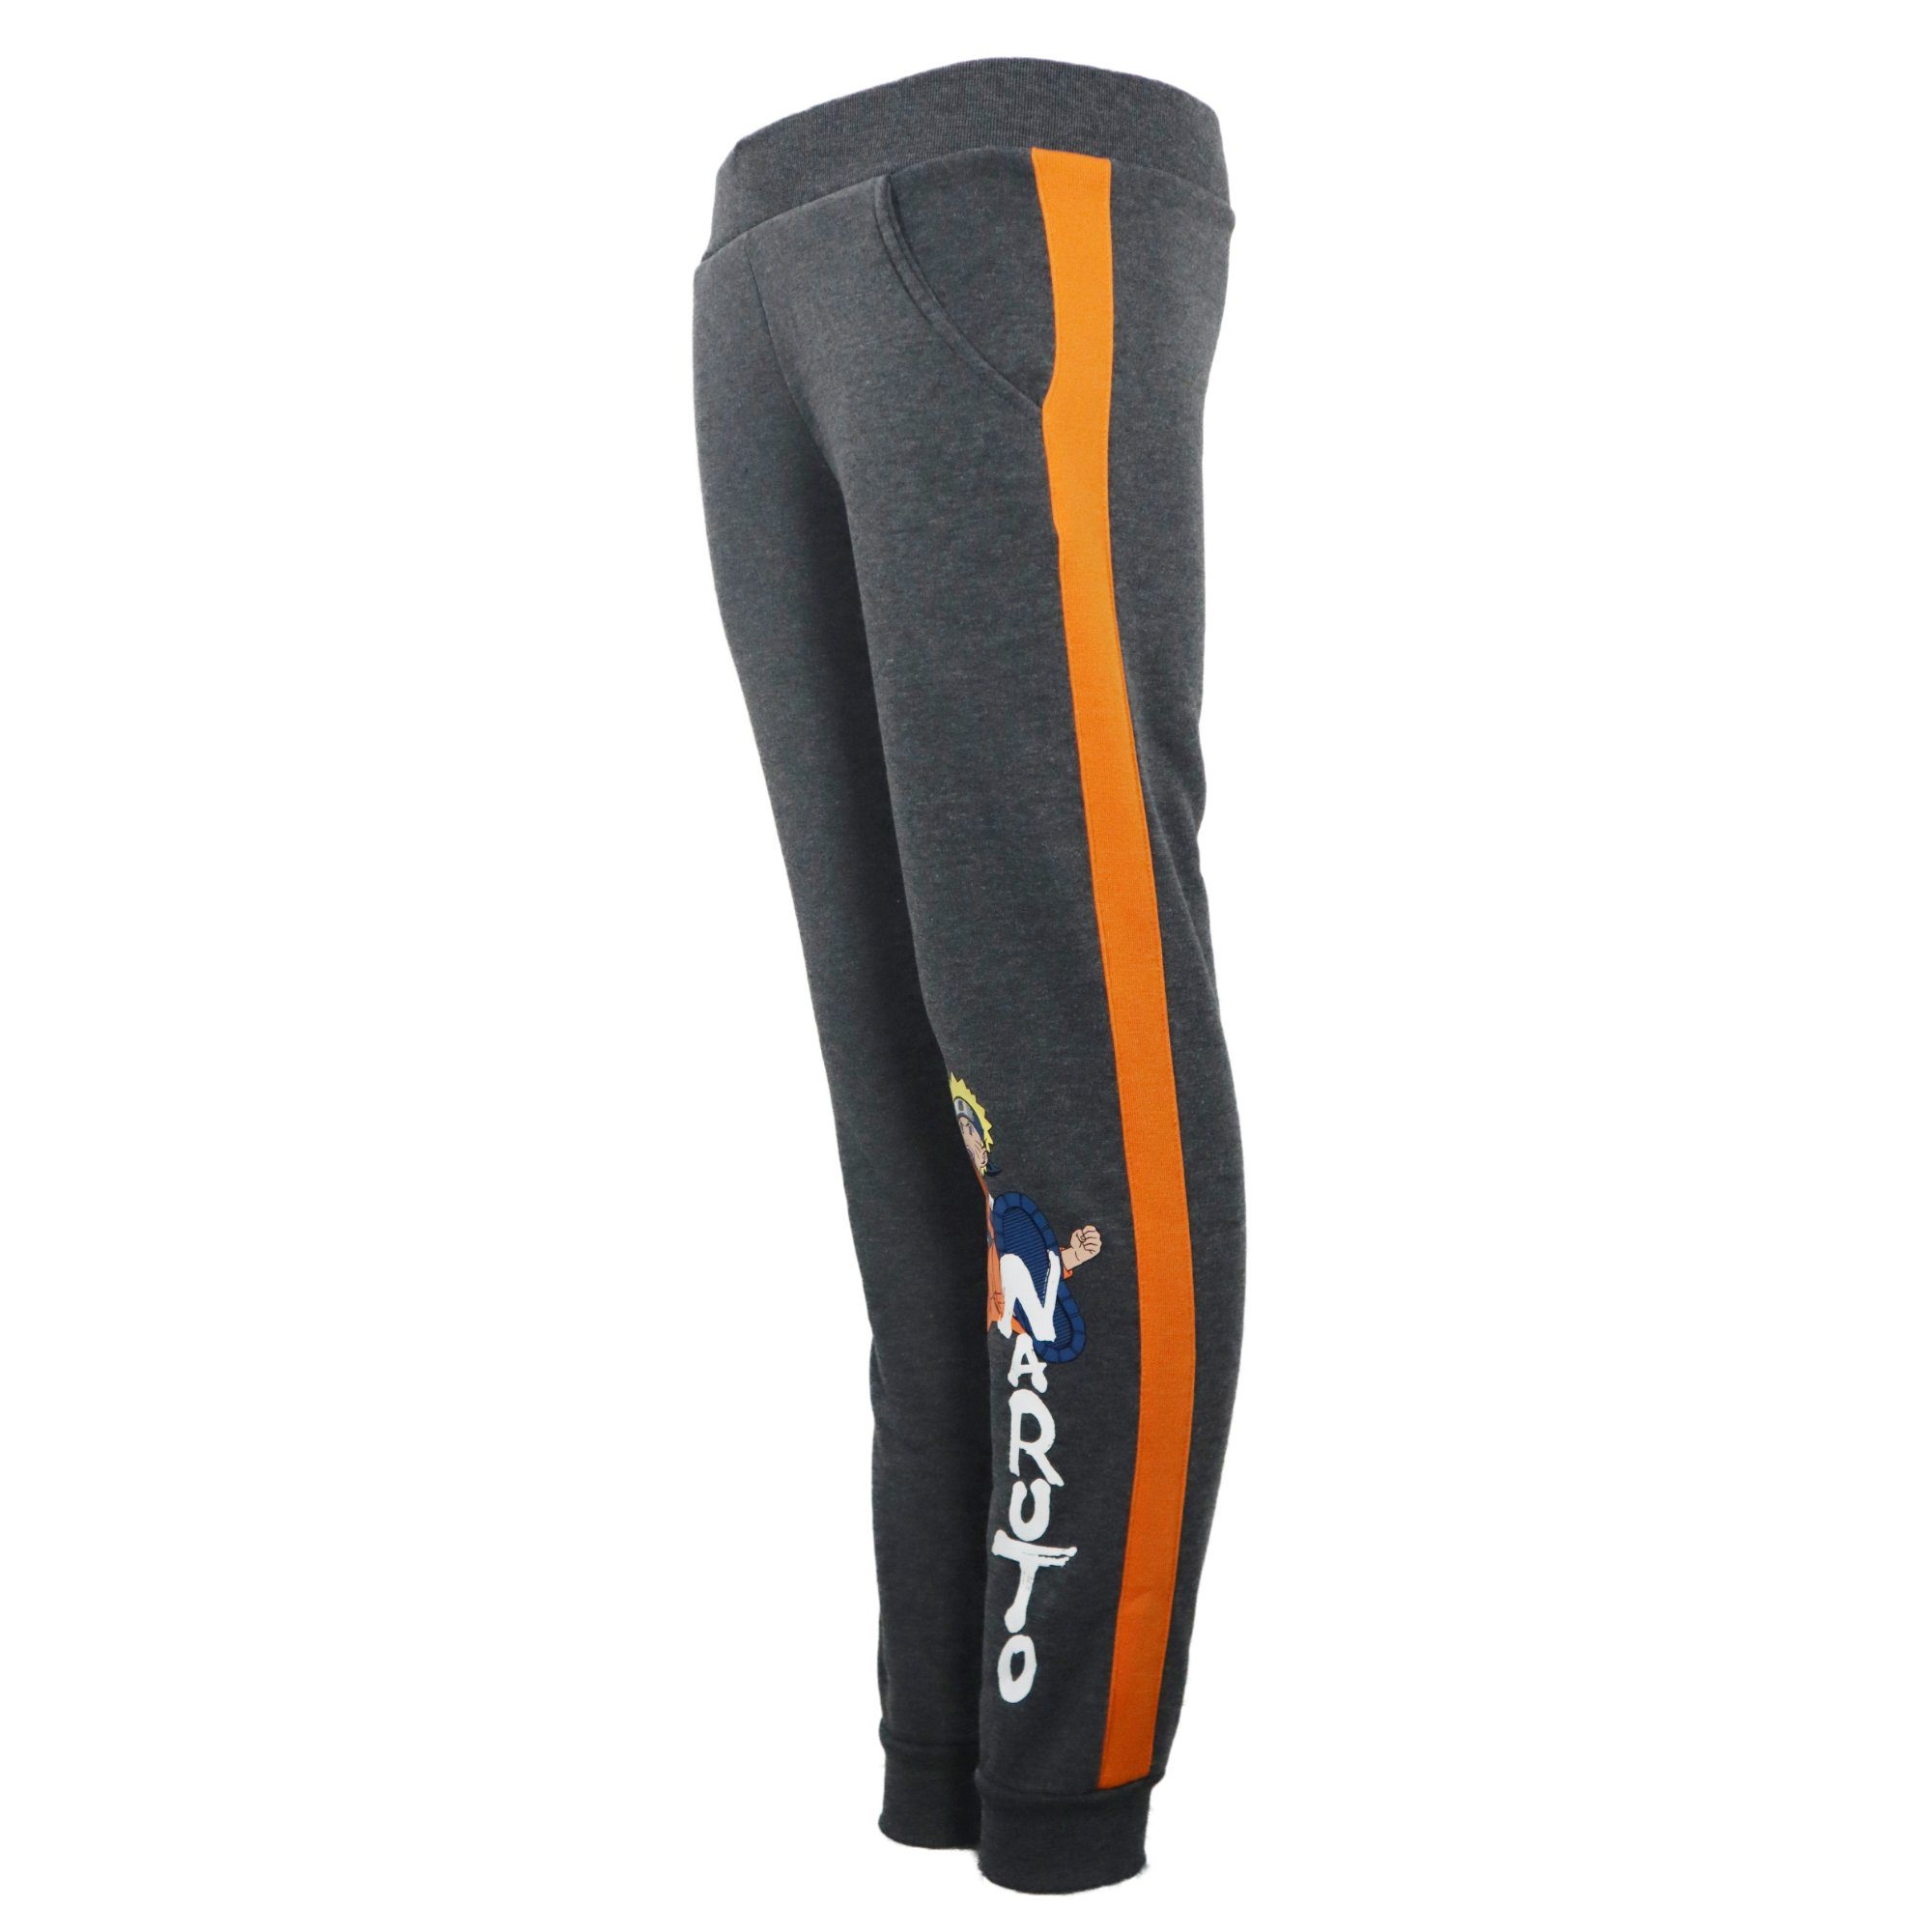 Naruto Jogginganzug Naruto Shippuden Joggingset 98 Hose Jacke, bis 140 Orange Sweater Gr. Sporthose